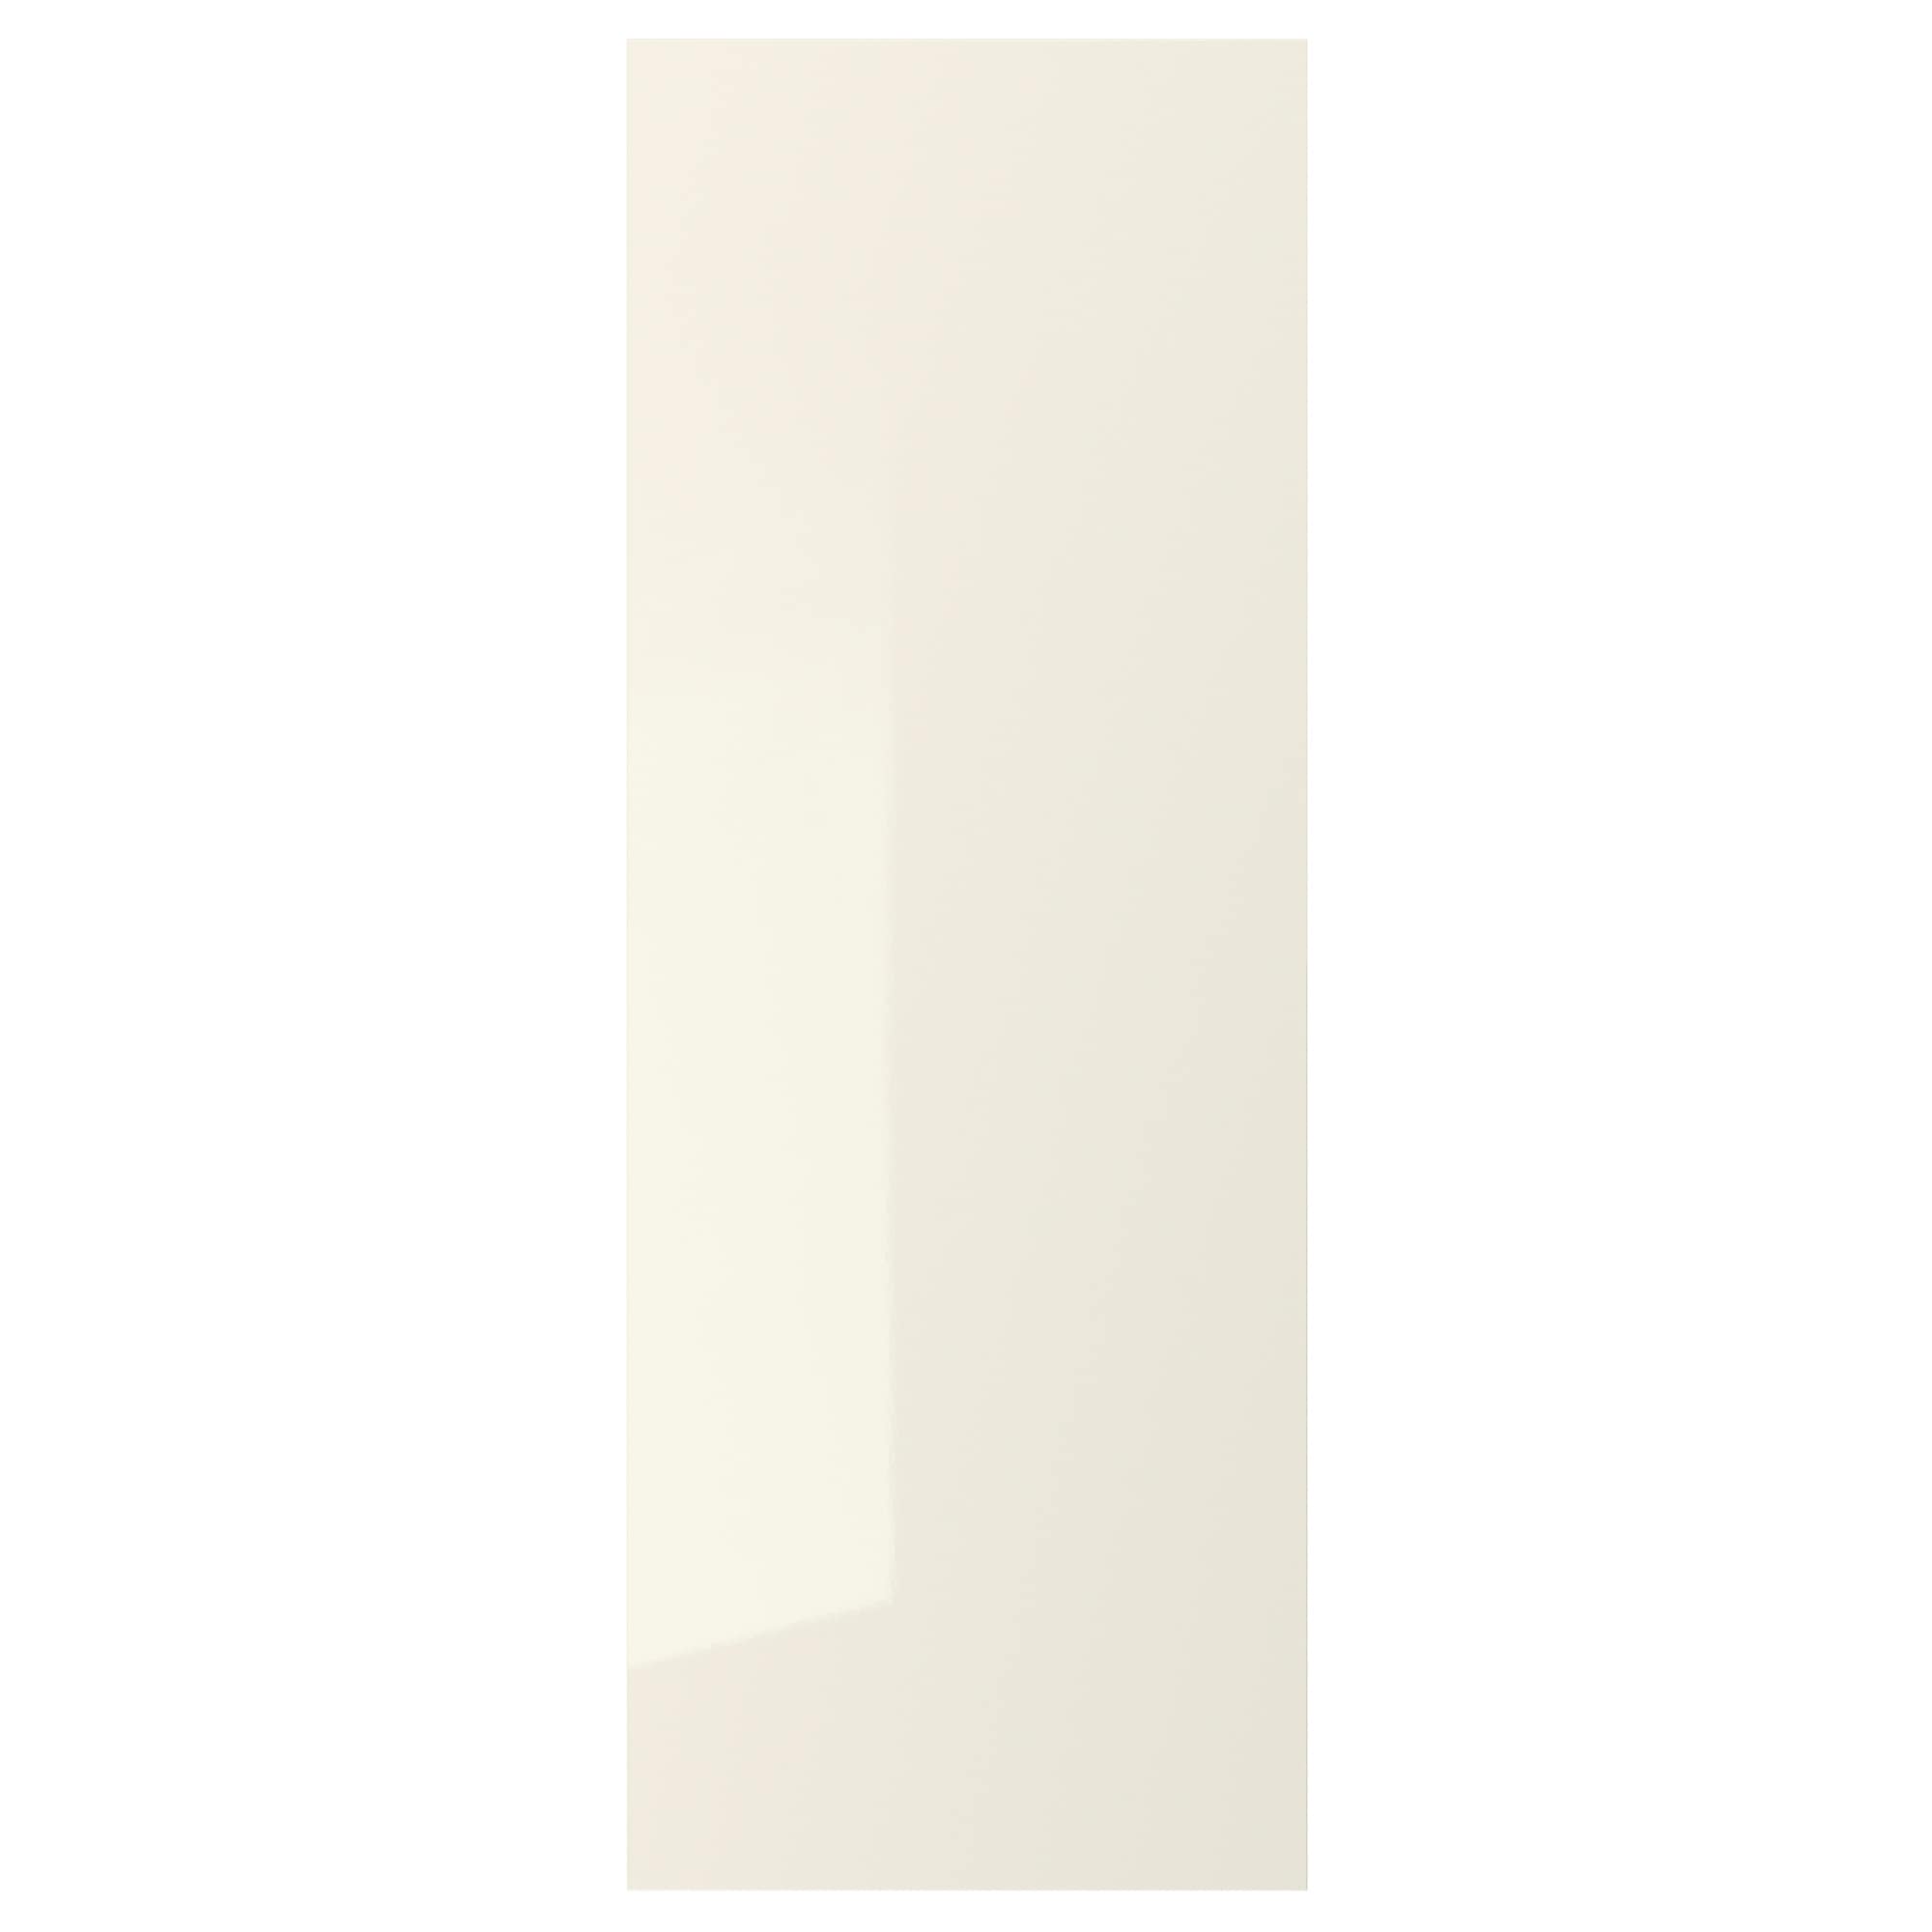 VOXTORP - Cover panel, high-gloss light beige